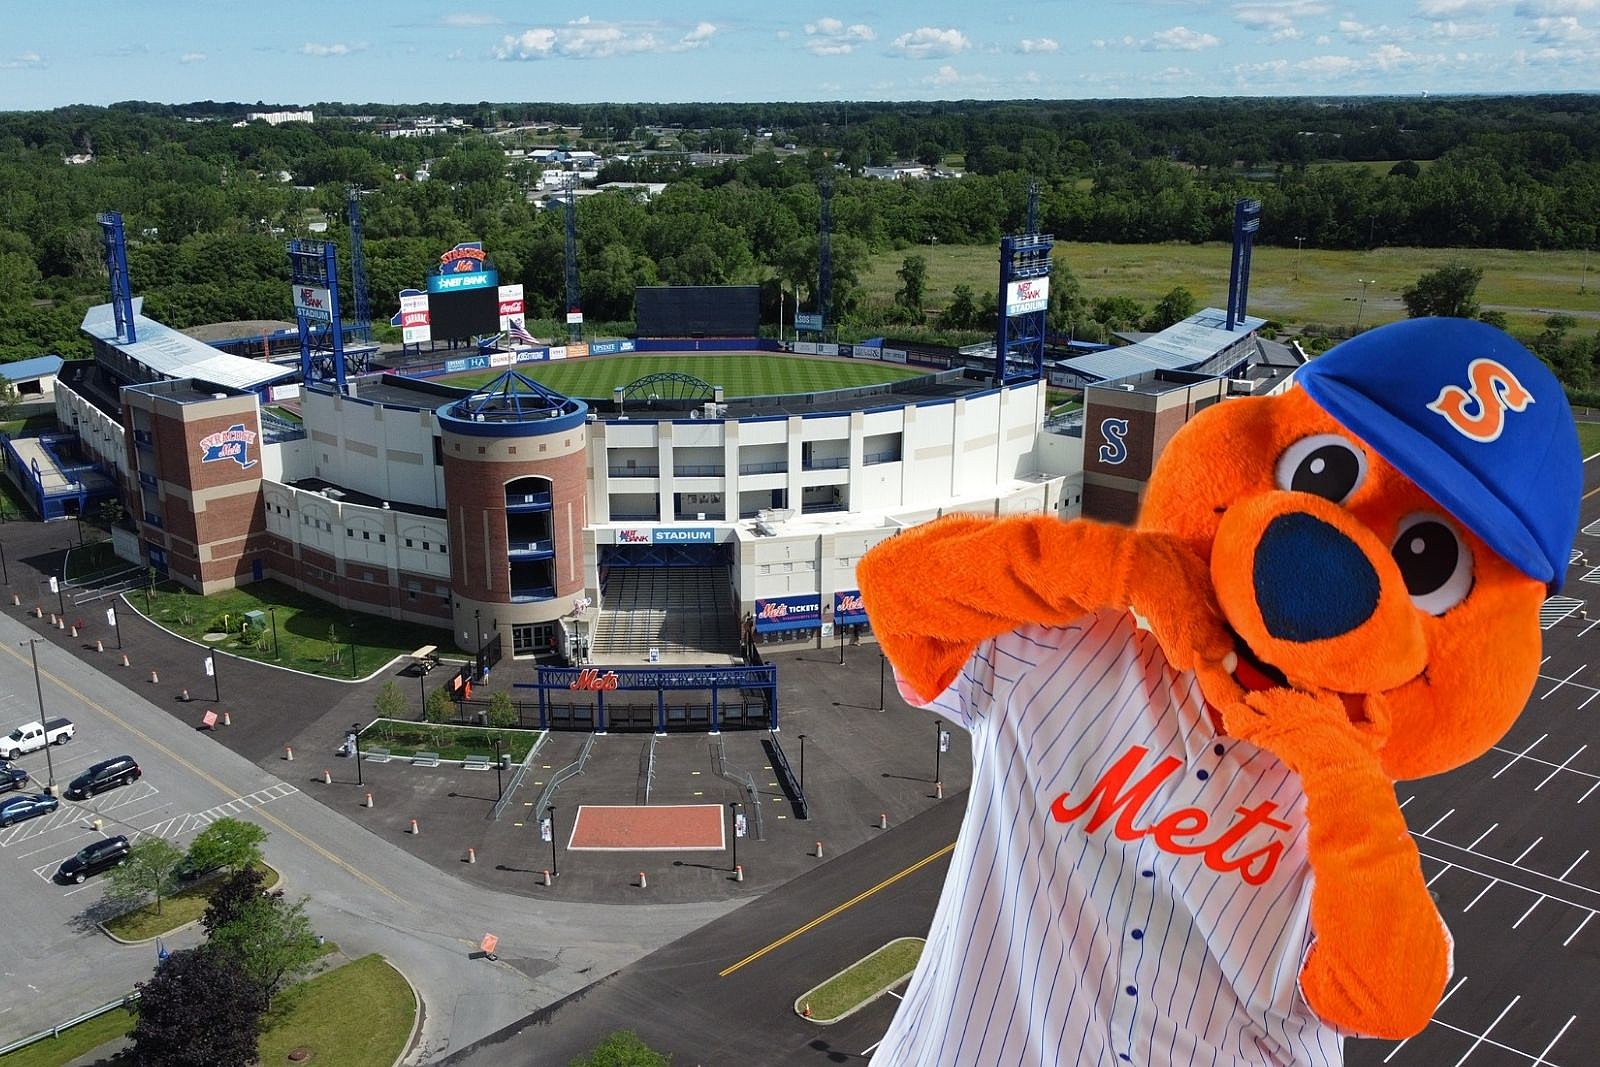 Syracuse Mets - Syracuse Mets added a new photo.